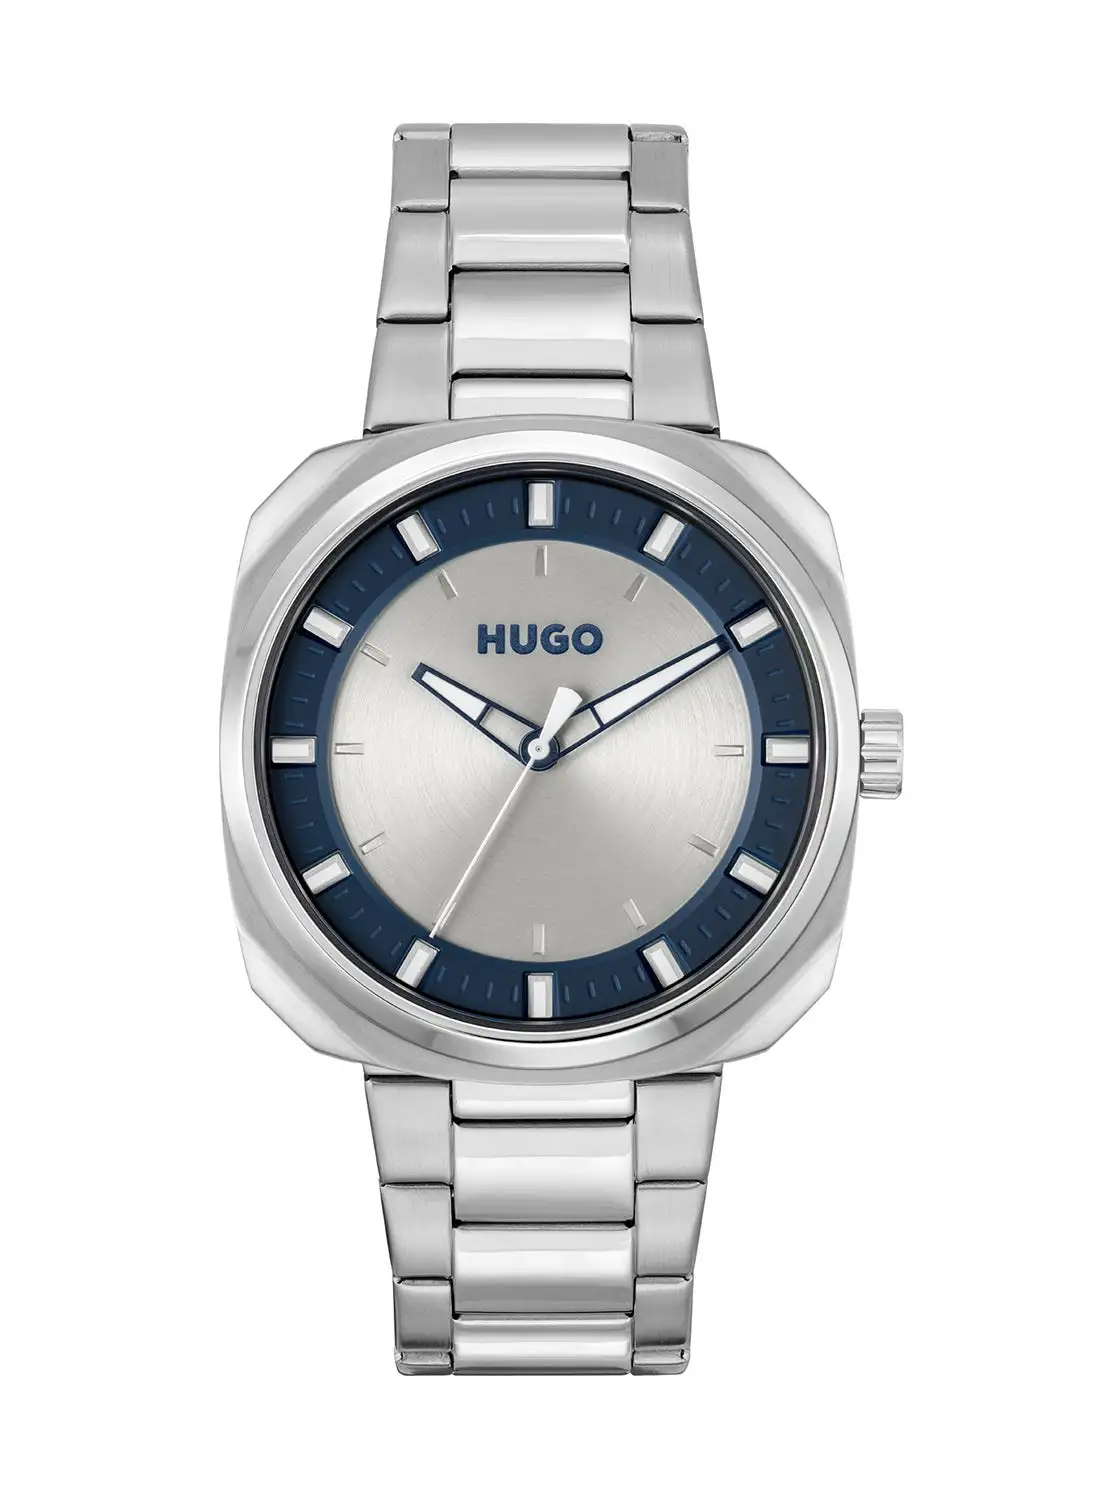 HUGO BOSS Men's Analog Octagon Shape Stainless Steel Wrist Watch 1530309 - 42 Mm